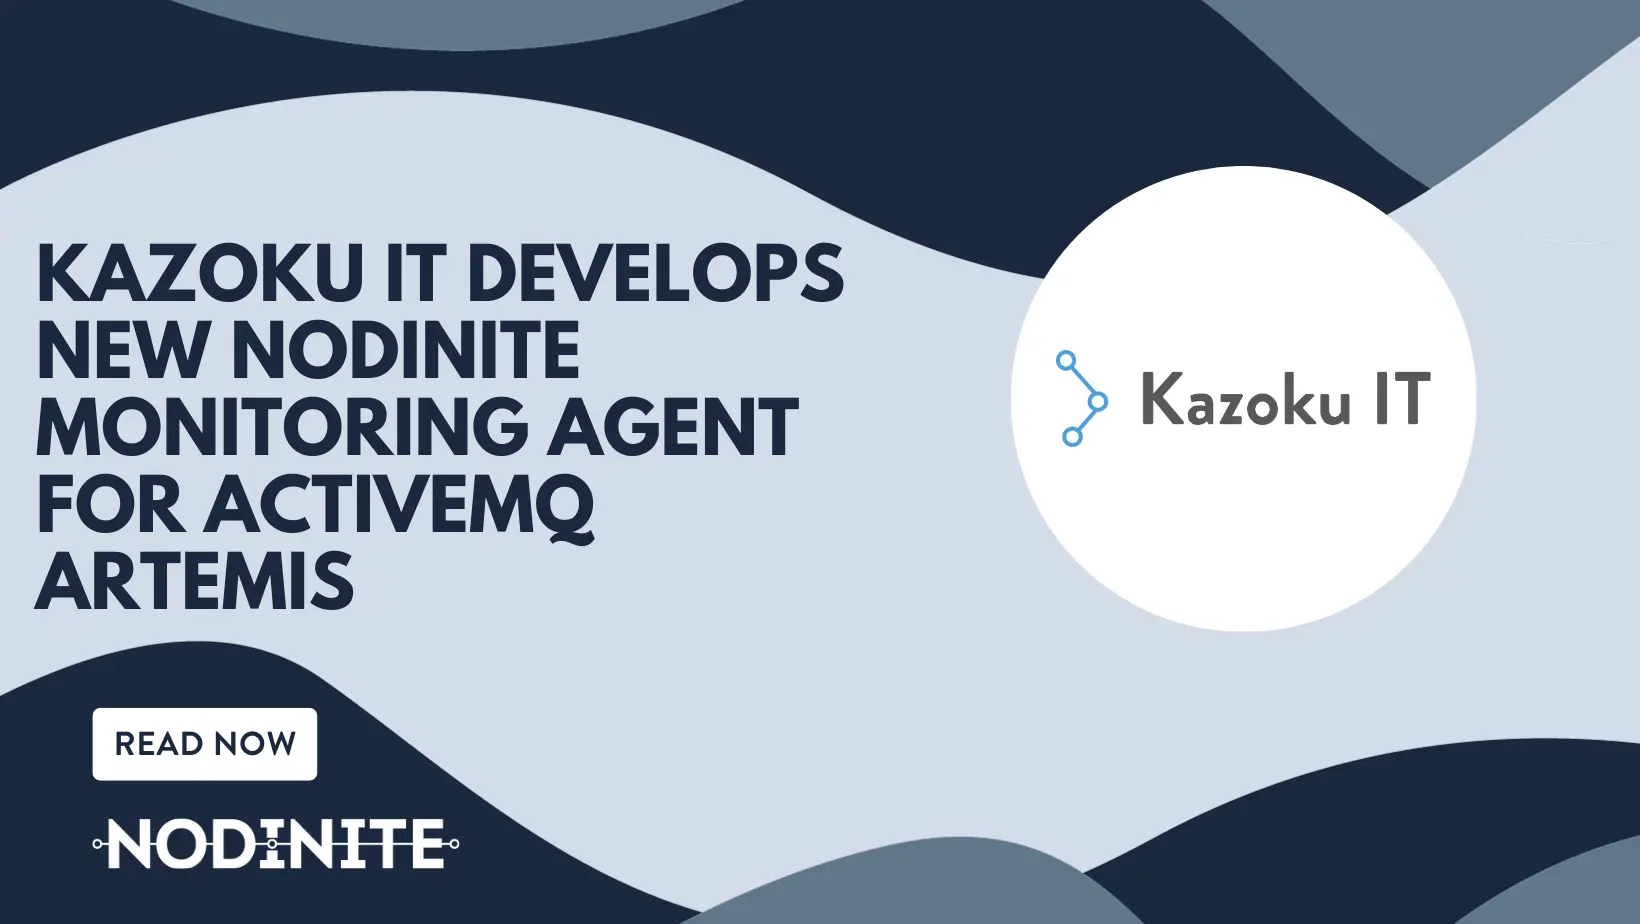 Kazuko IT has developed an ActiveMQ Artemis Nodinite monitoring agent